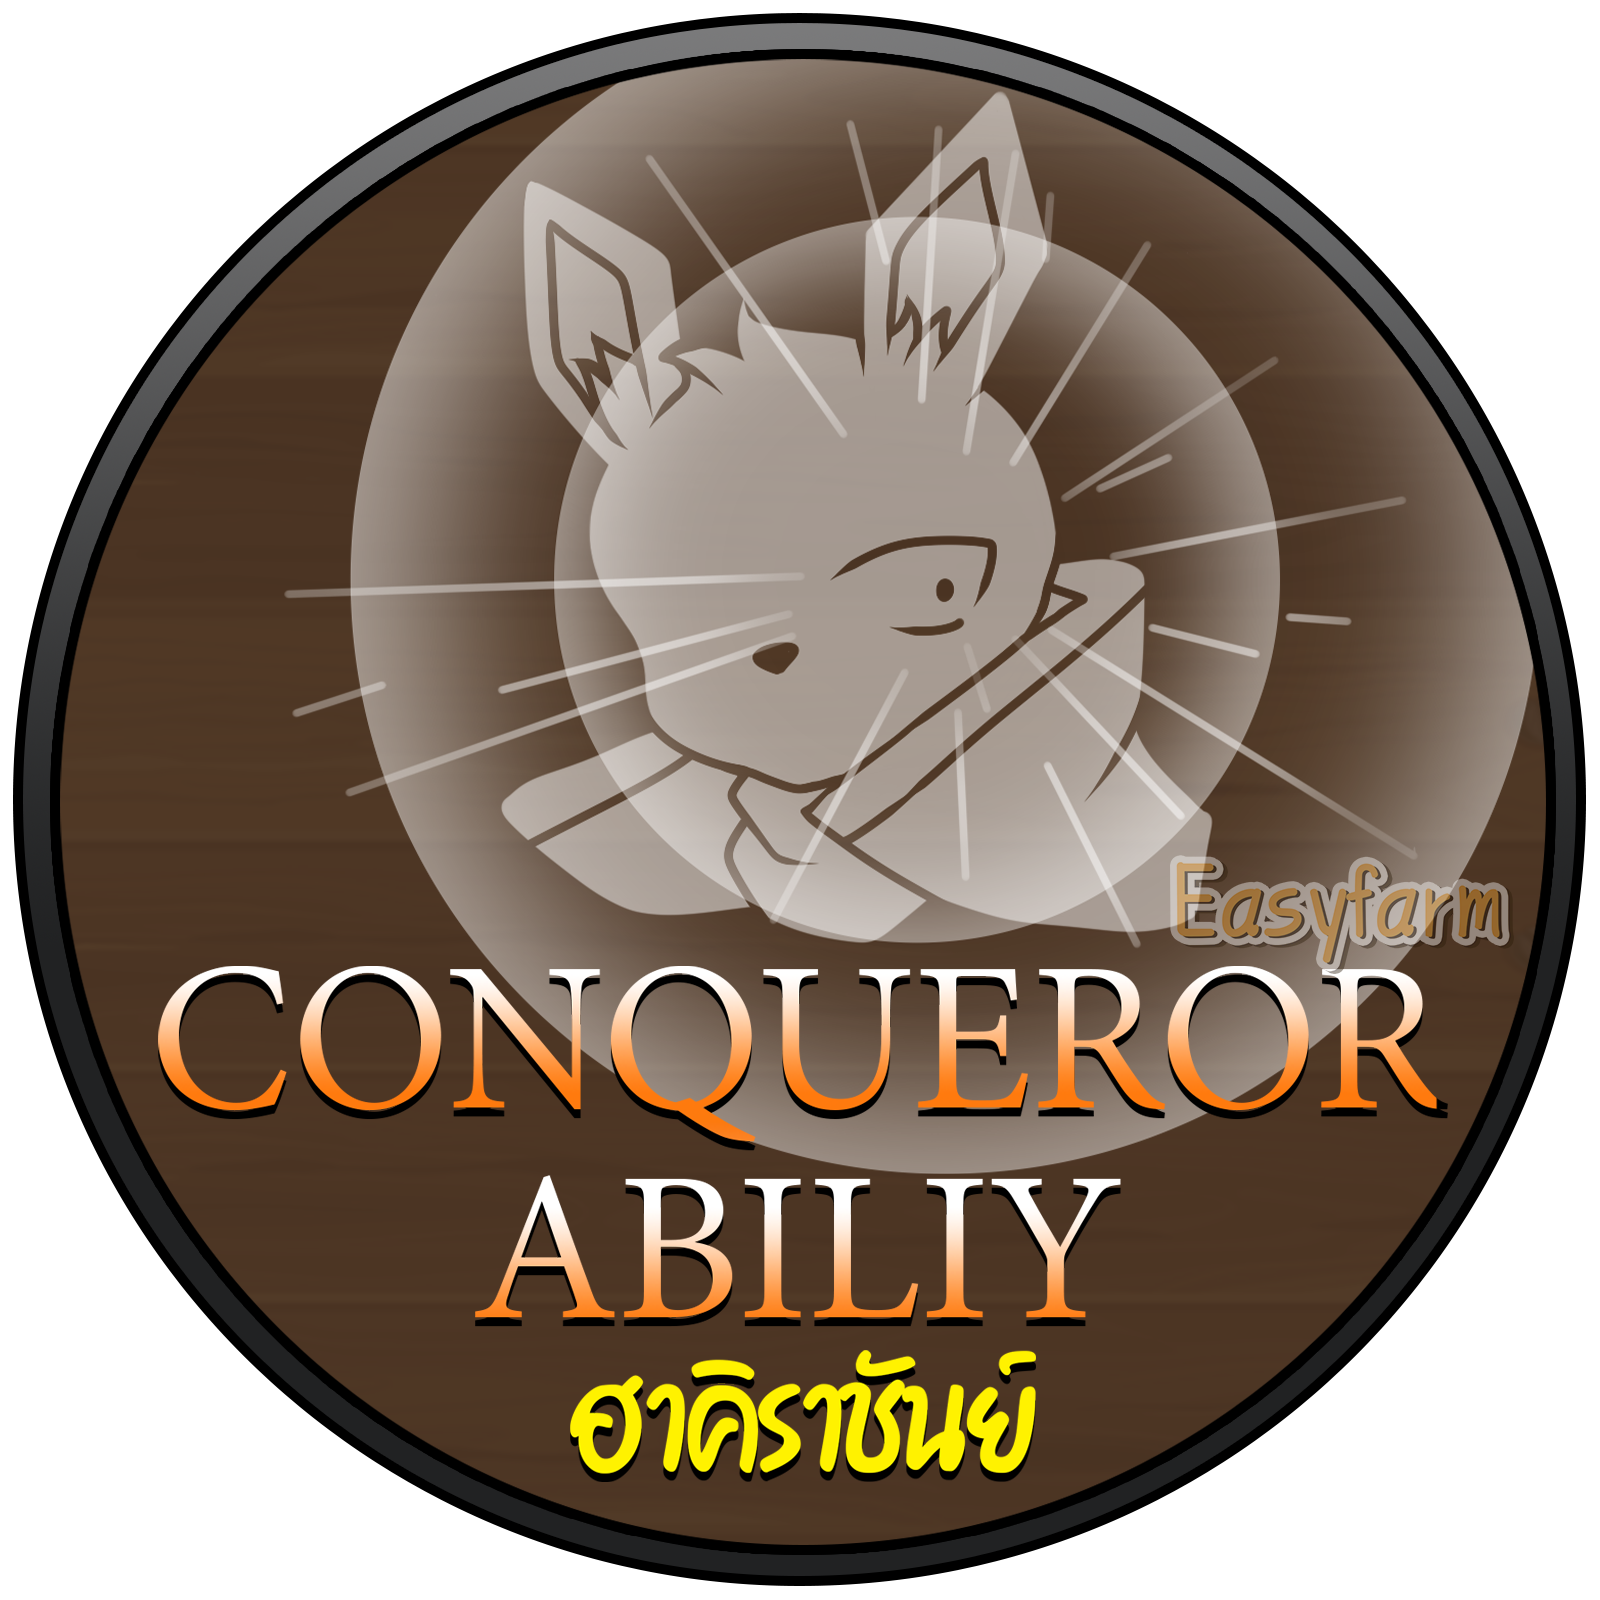 ConquerorAbility(ฮาคิราชัน) KL